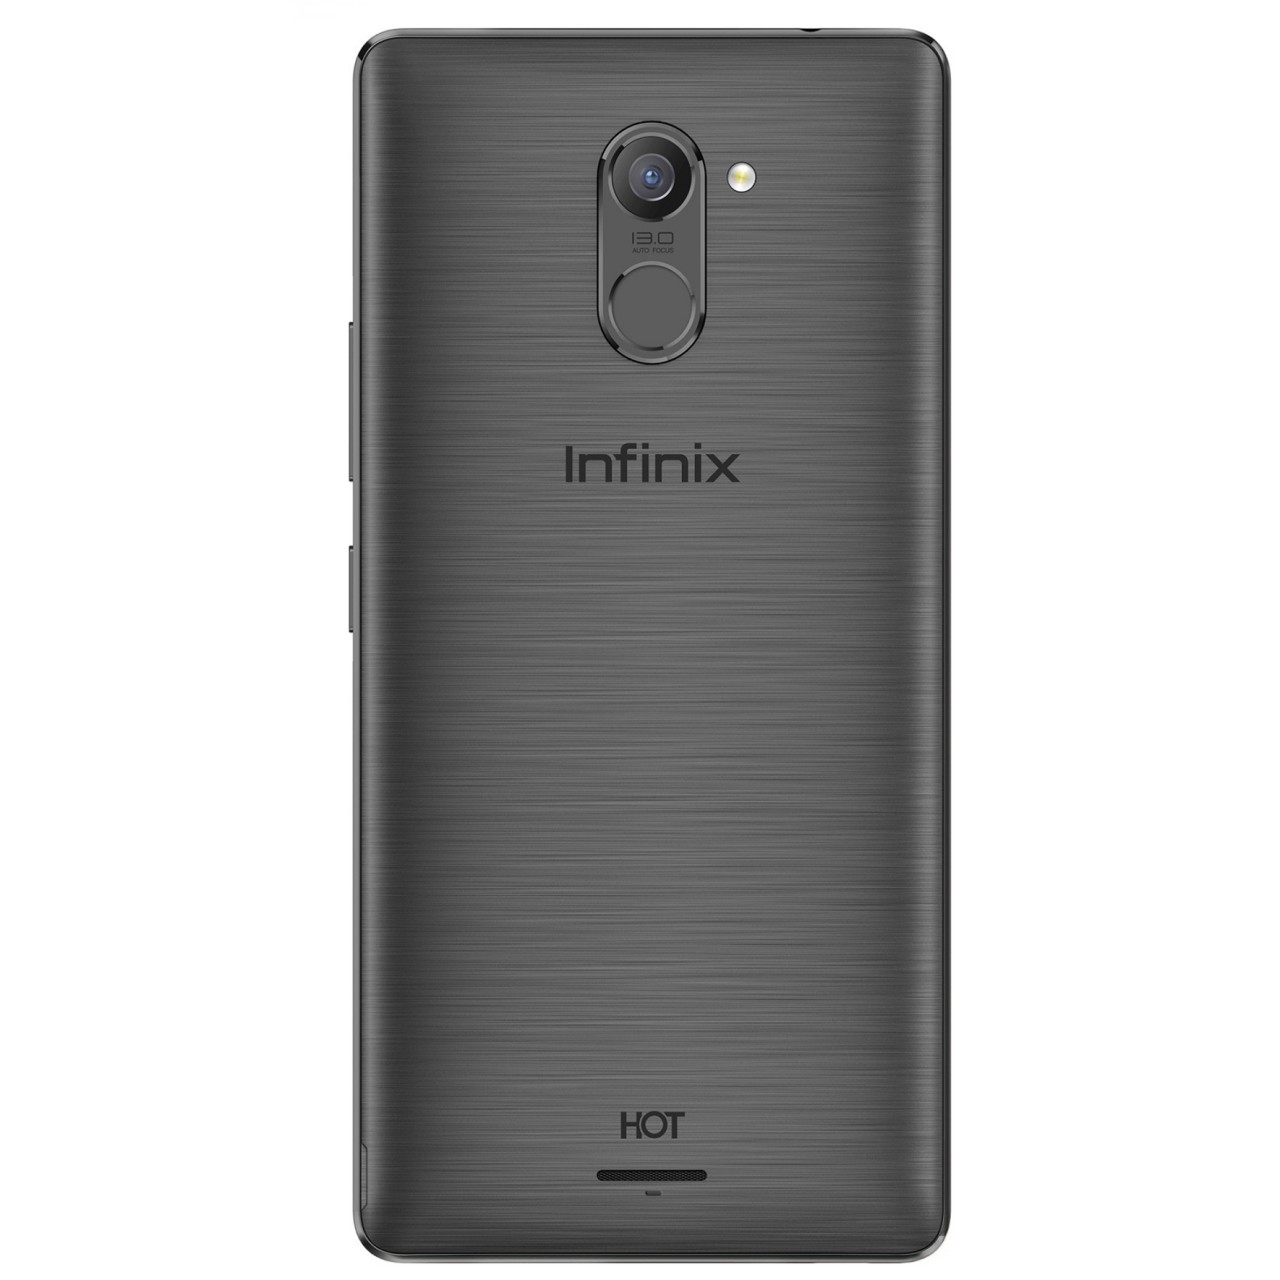 Infinix Hot 4 Pro - Ram 2GB - Rom 16GB - Camera 13MP - 5.5 Inches - 4000 mAh Battery